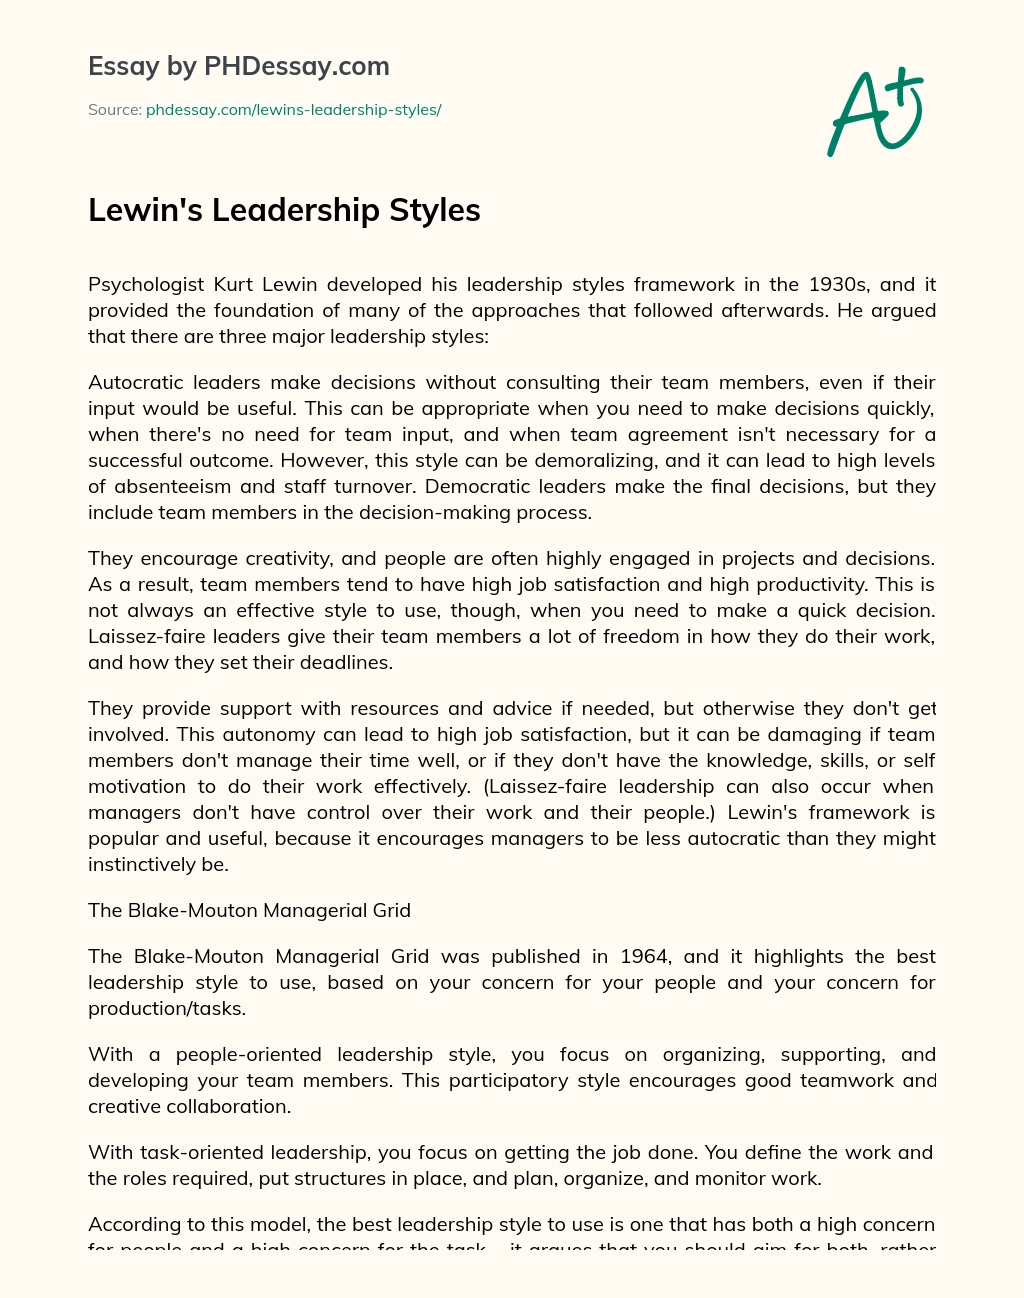 Lewin’s Leadership Styles essay